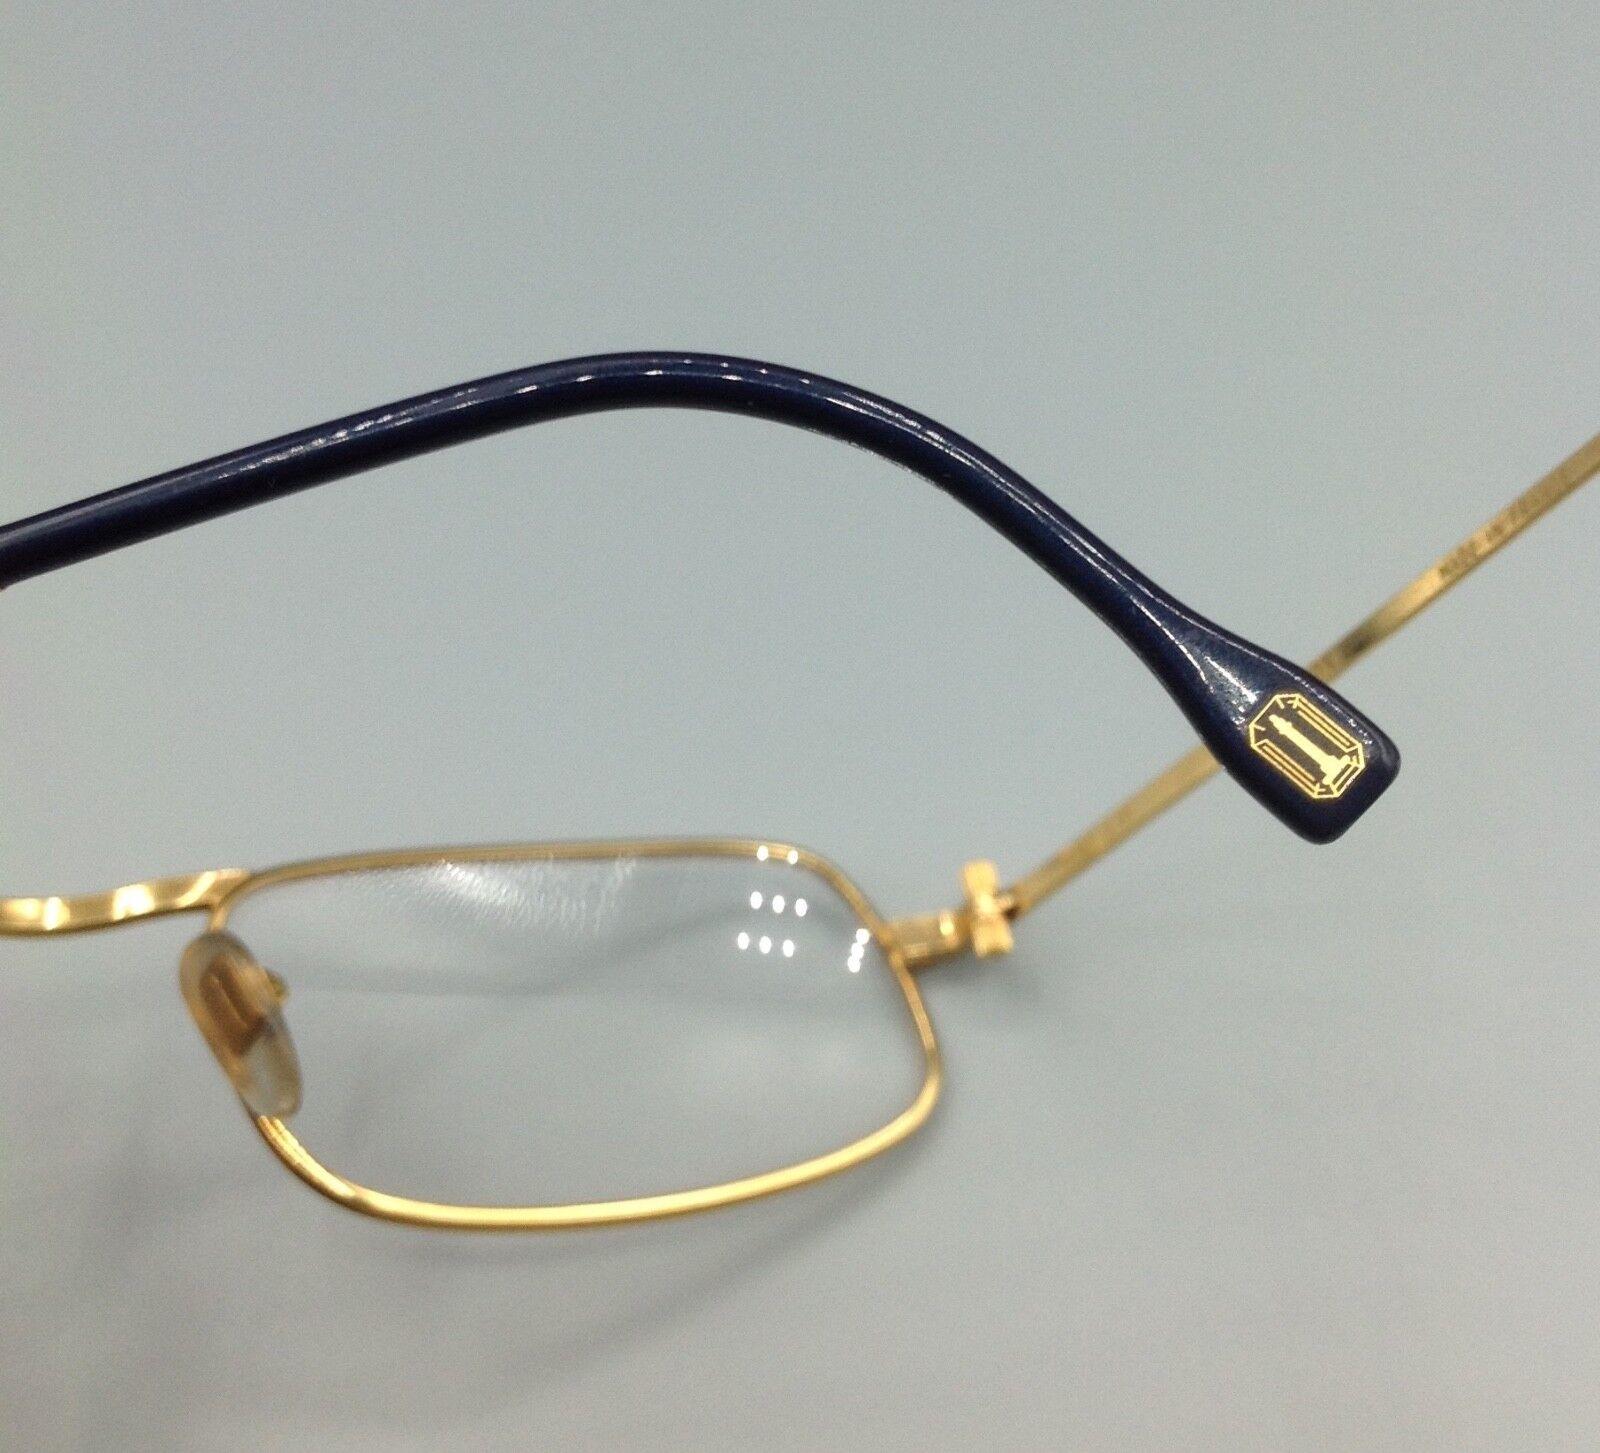 Boucheron Paris Lunettes vintage occhiale gold filled eyewear made in France